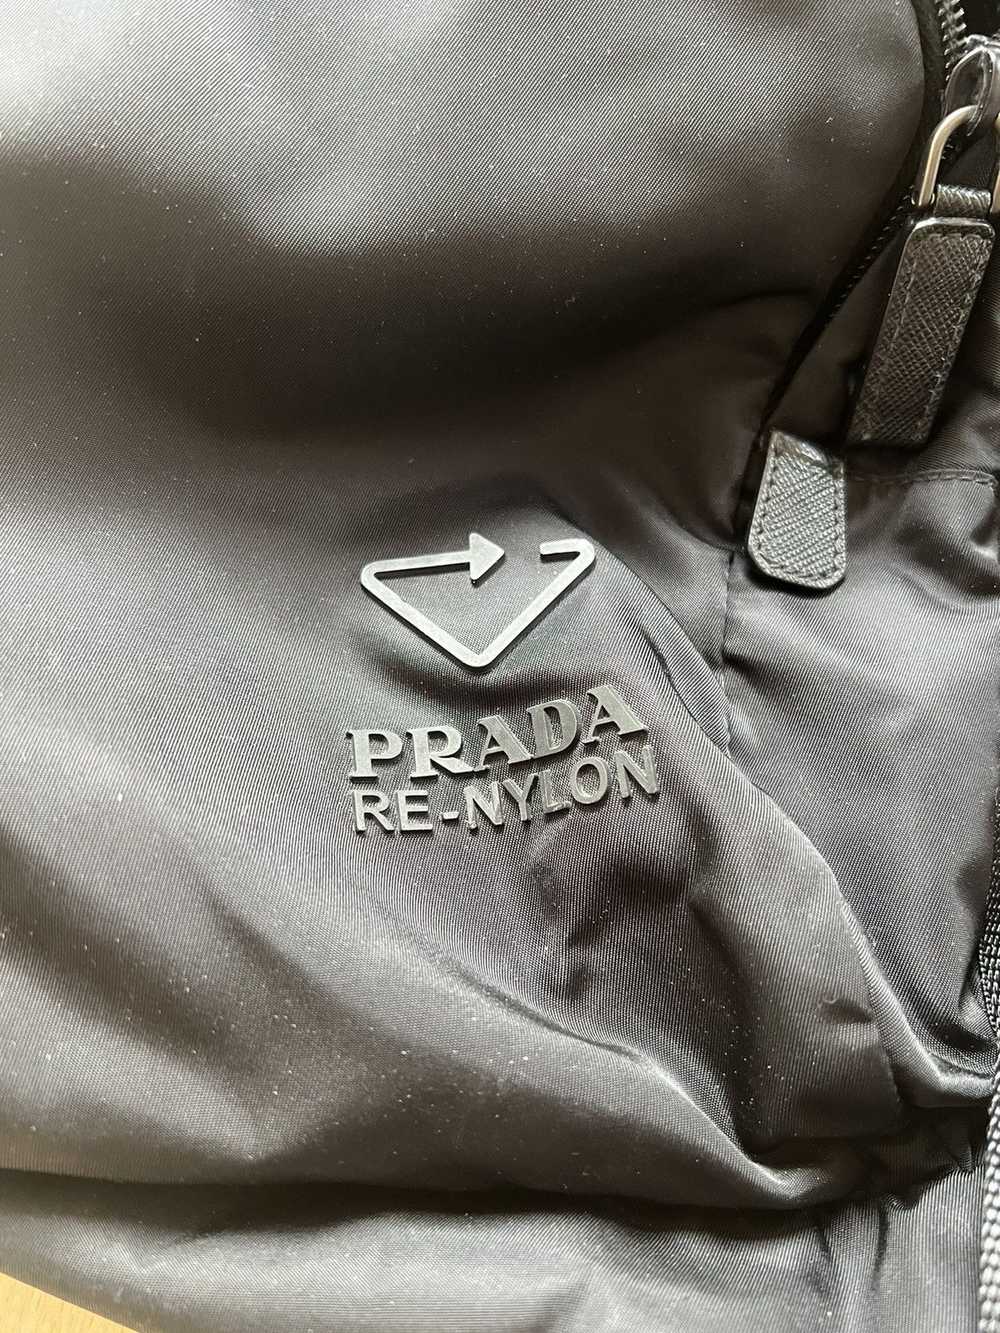 Prada PRADA SS 22 Re-Nylon Backpack - image 9